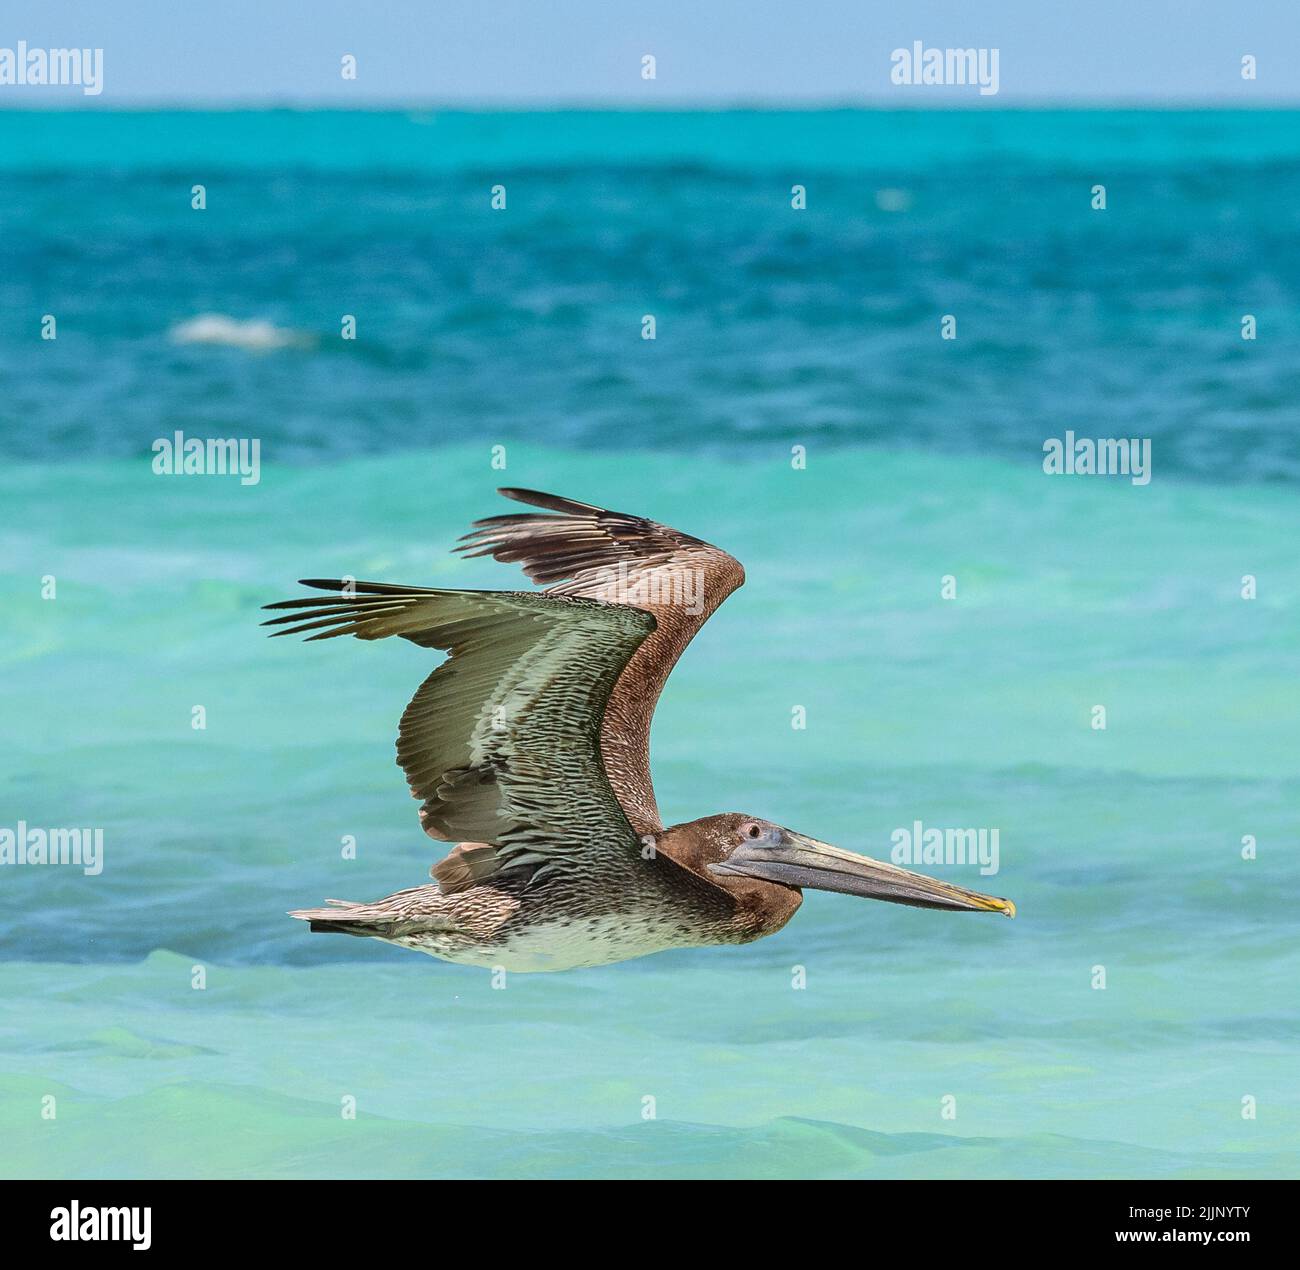 A Cuban Pelican in flight over caribbean ocean aqua waters Stock Photo